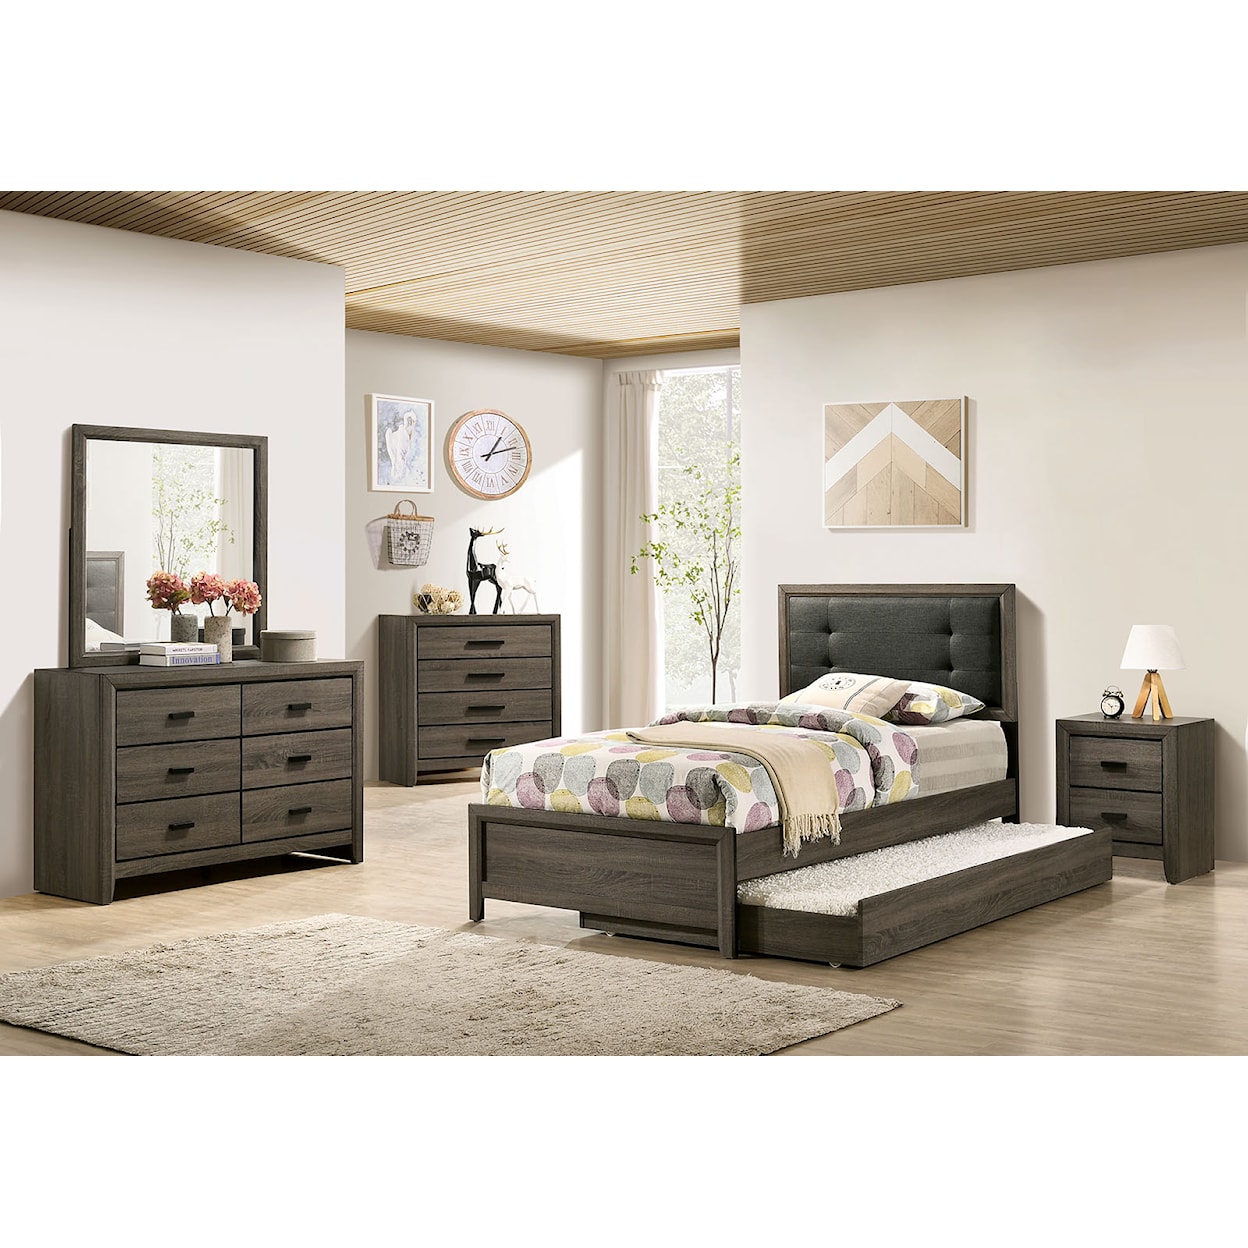 Furniture of America Roanne 4 Pc. Twin Bedroom Set